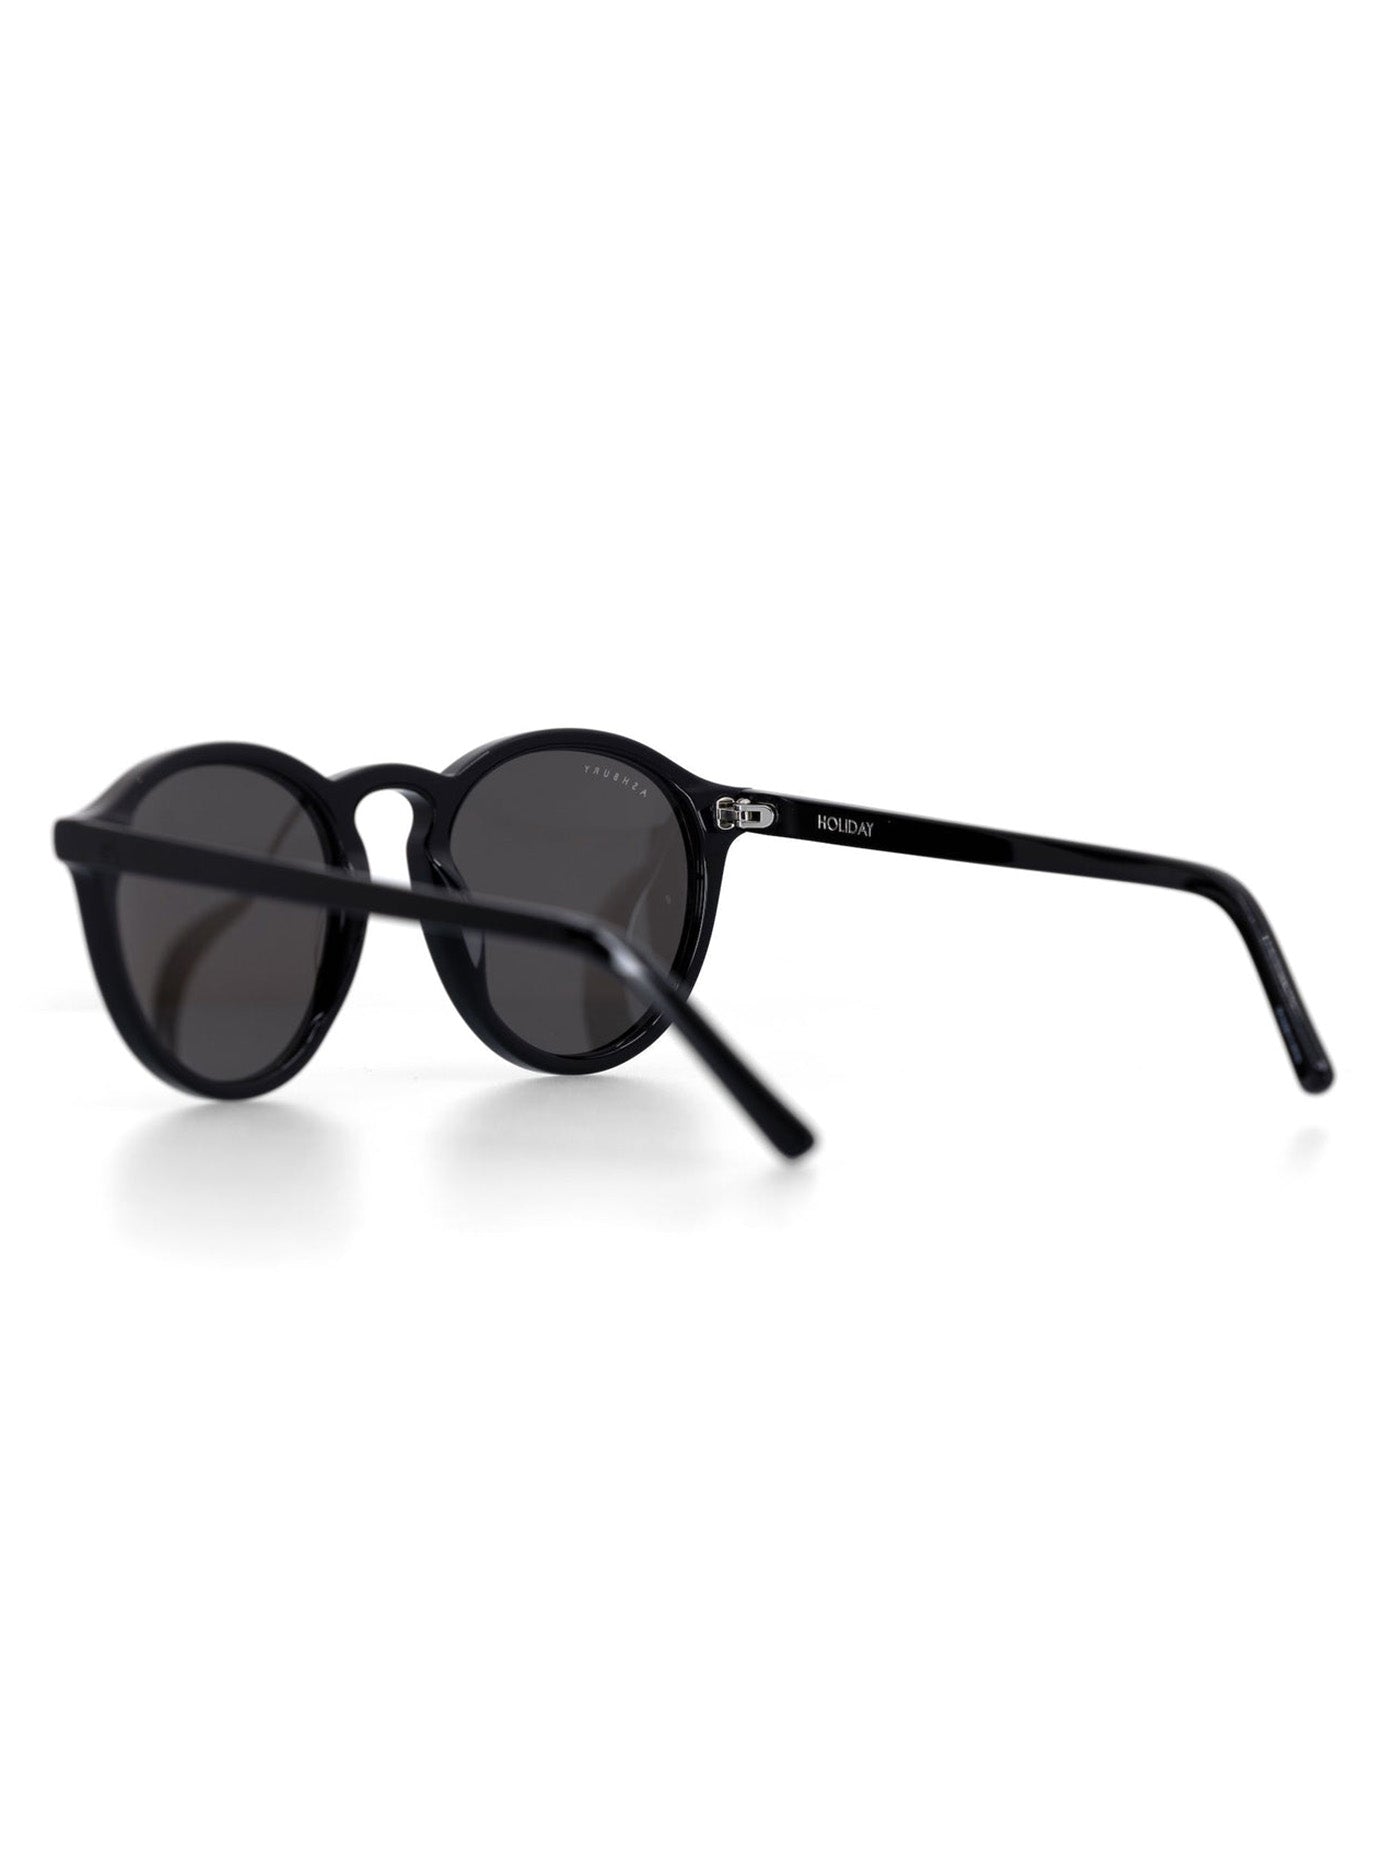 Ashbury Holiday Black Gloss Sunglasses